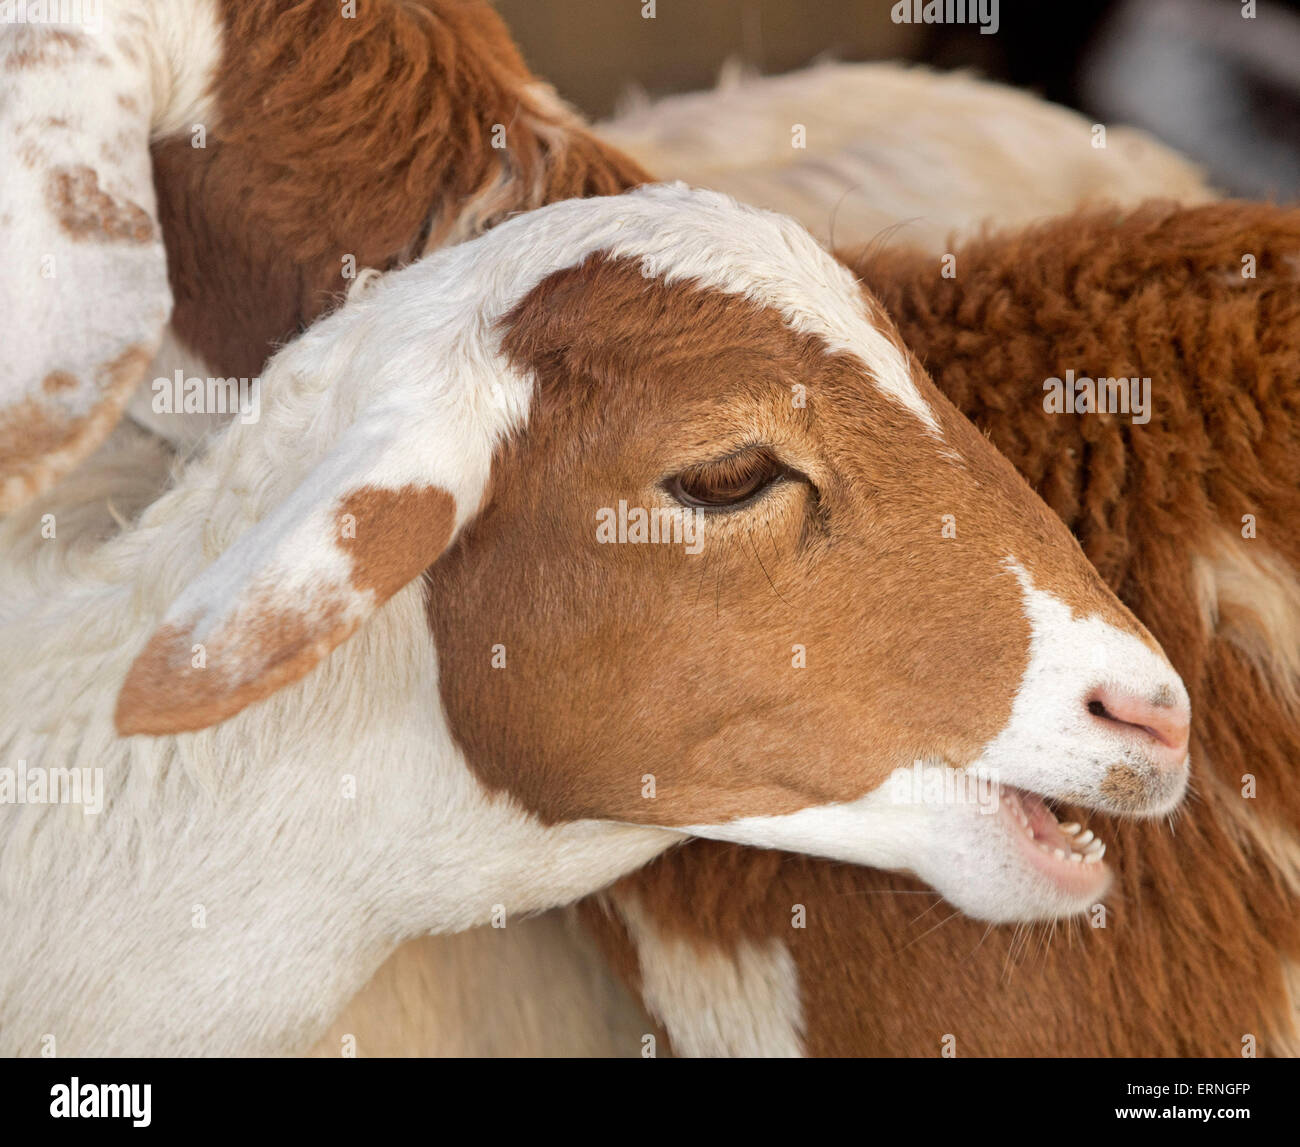 Goat Face Stock Photos & Goat Face Stock Images - Alamy